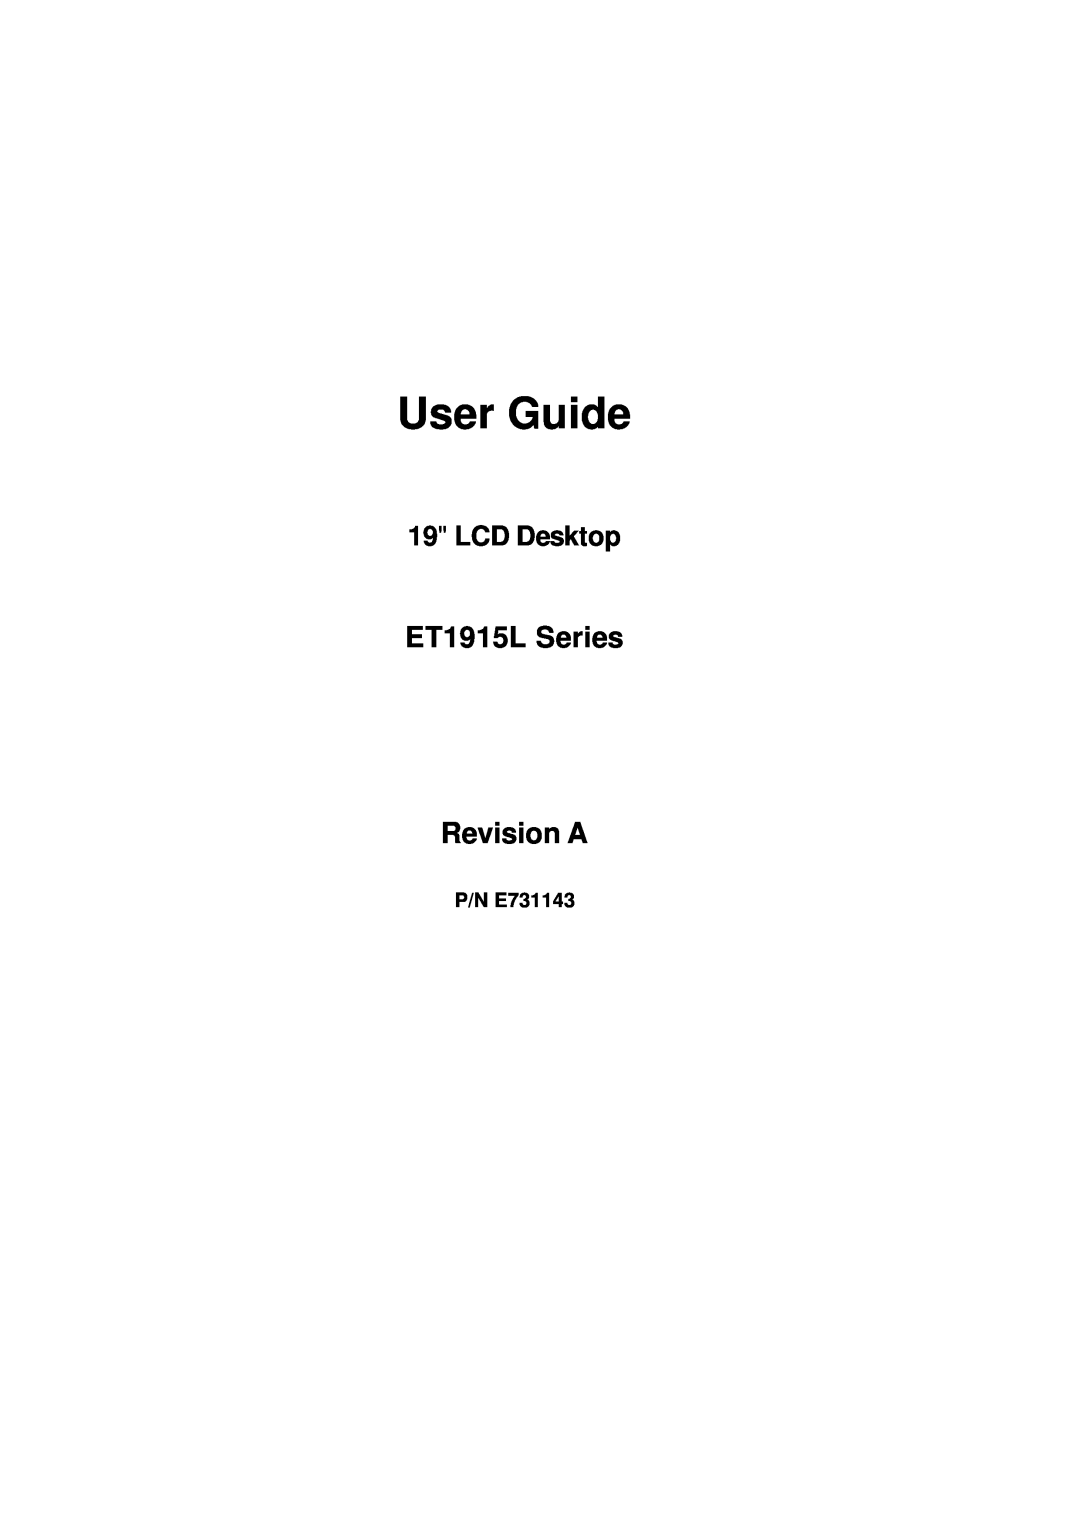 Elo TouchSystems 1000 Series manual ET1915L Series Revision A, User Guide, LCD Desktop, P/N E731143 